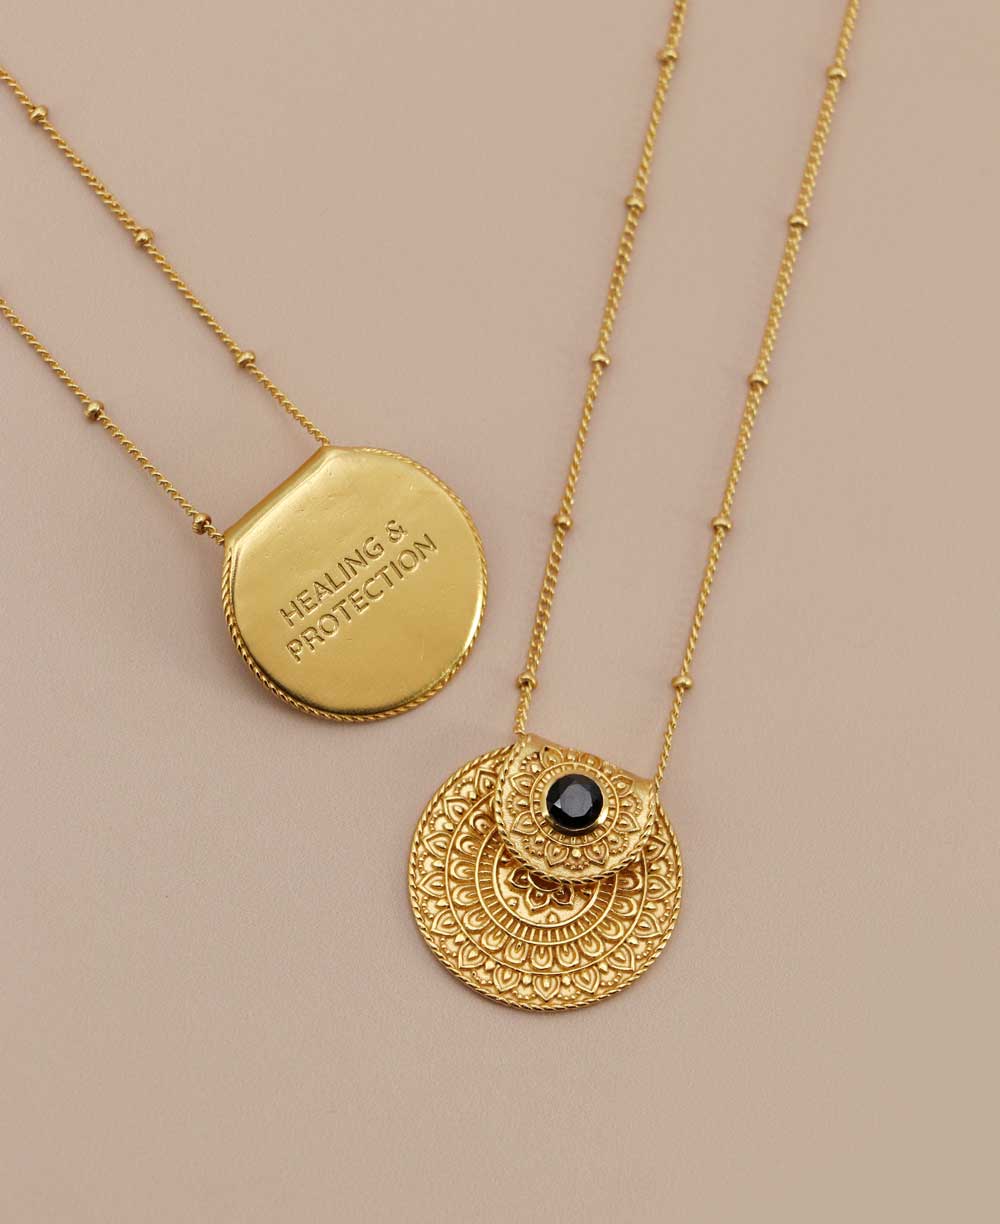 Inspirational Gold Plated Mandala Necklace with Black Onyx Stone - Necklaces